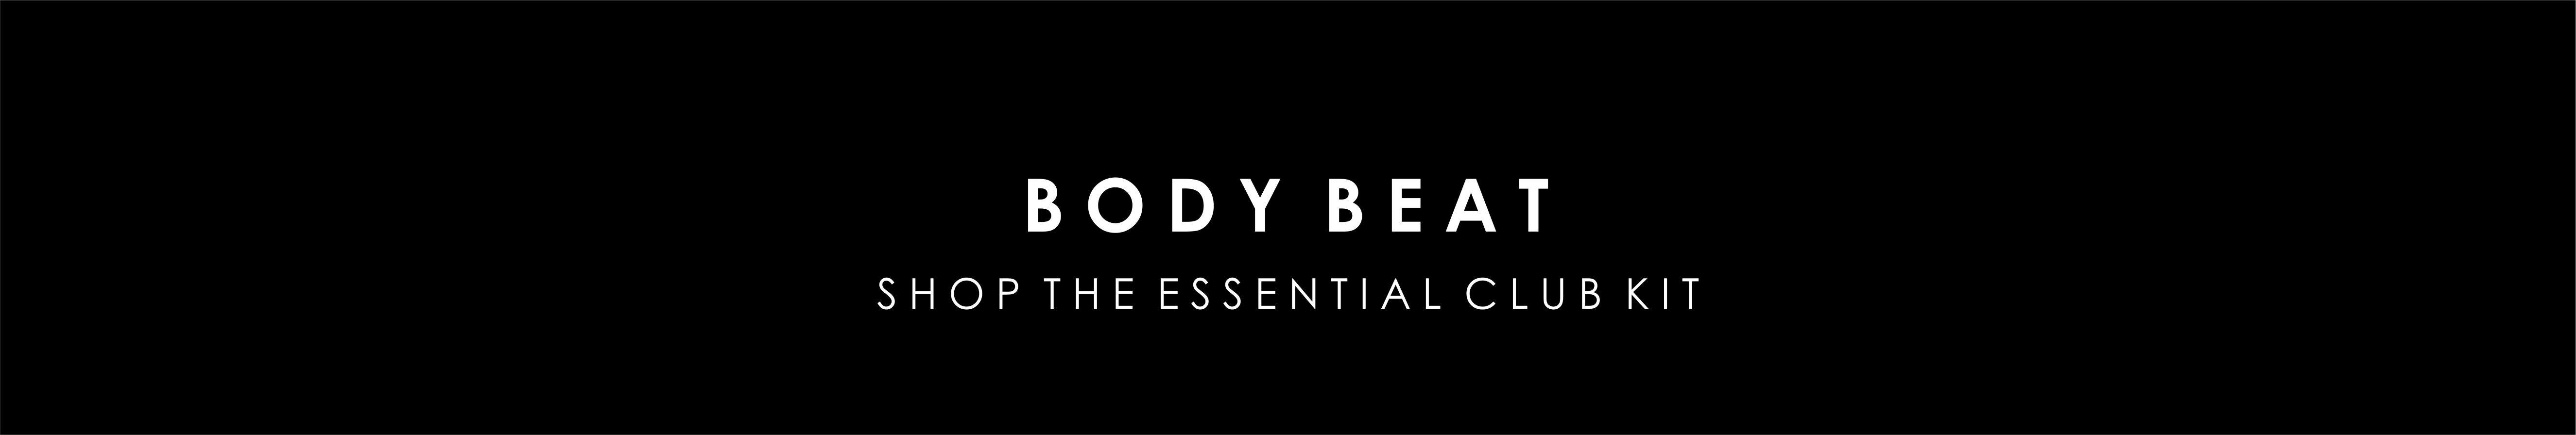 body-beat-banner.jpg